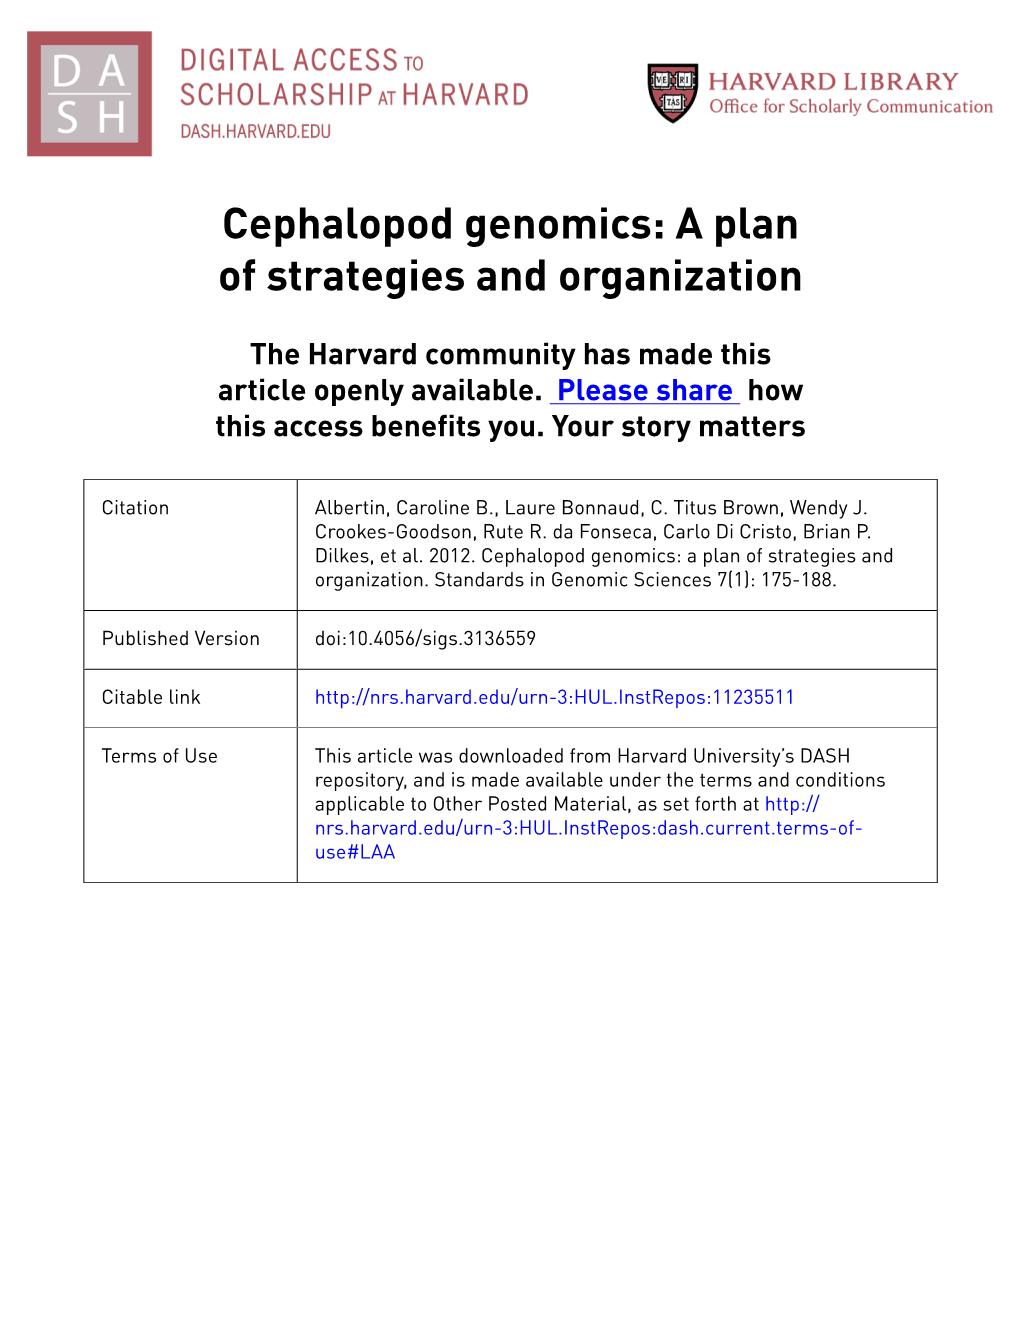 Cephalopod Genomics: a Plan of Strategies and Organization